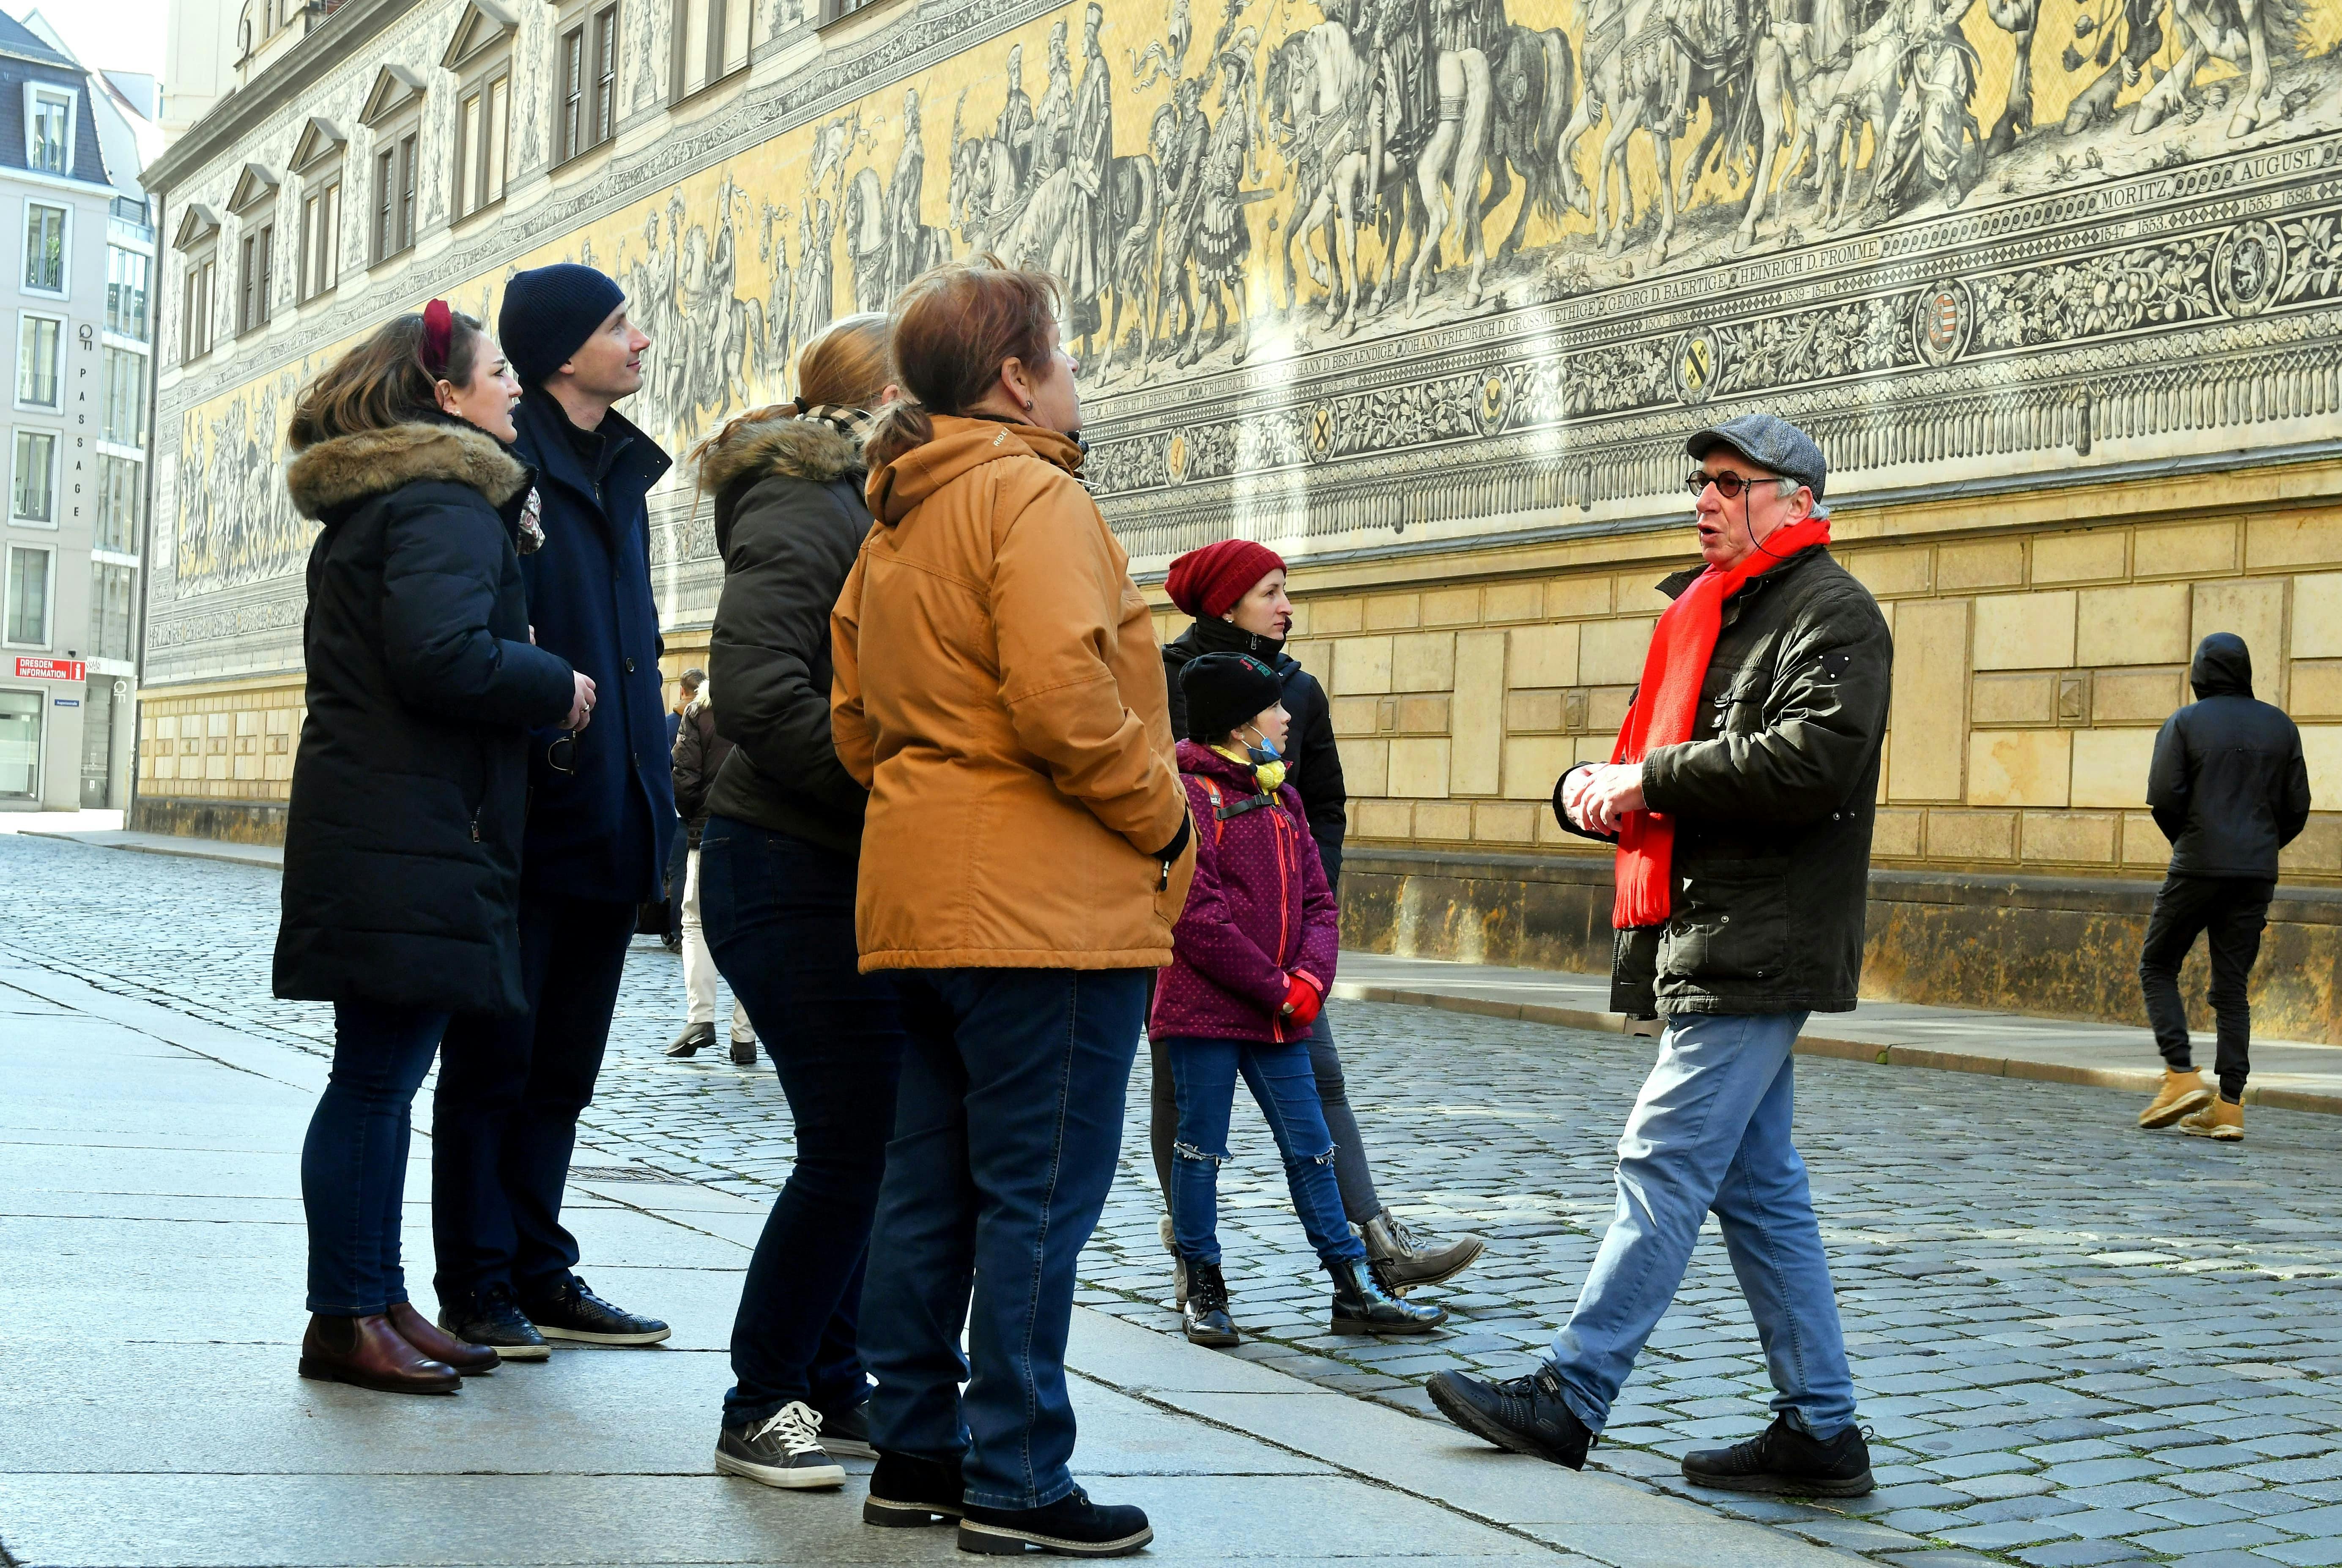 Faszination Dresden- besonderer Stadtrundgang durch die Altstadt